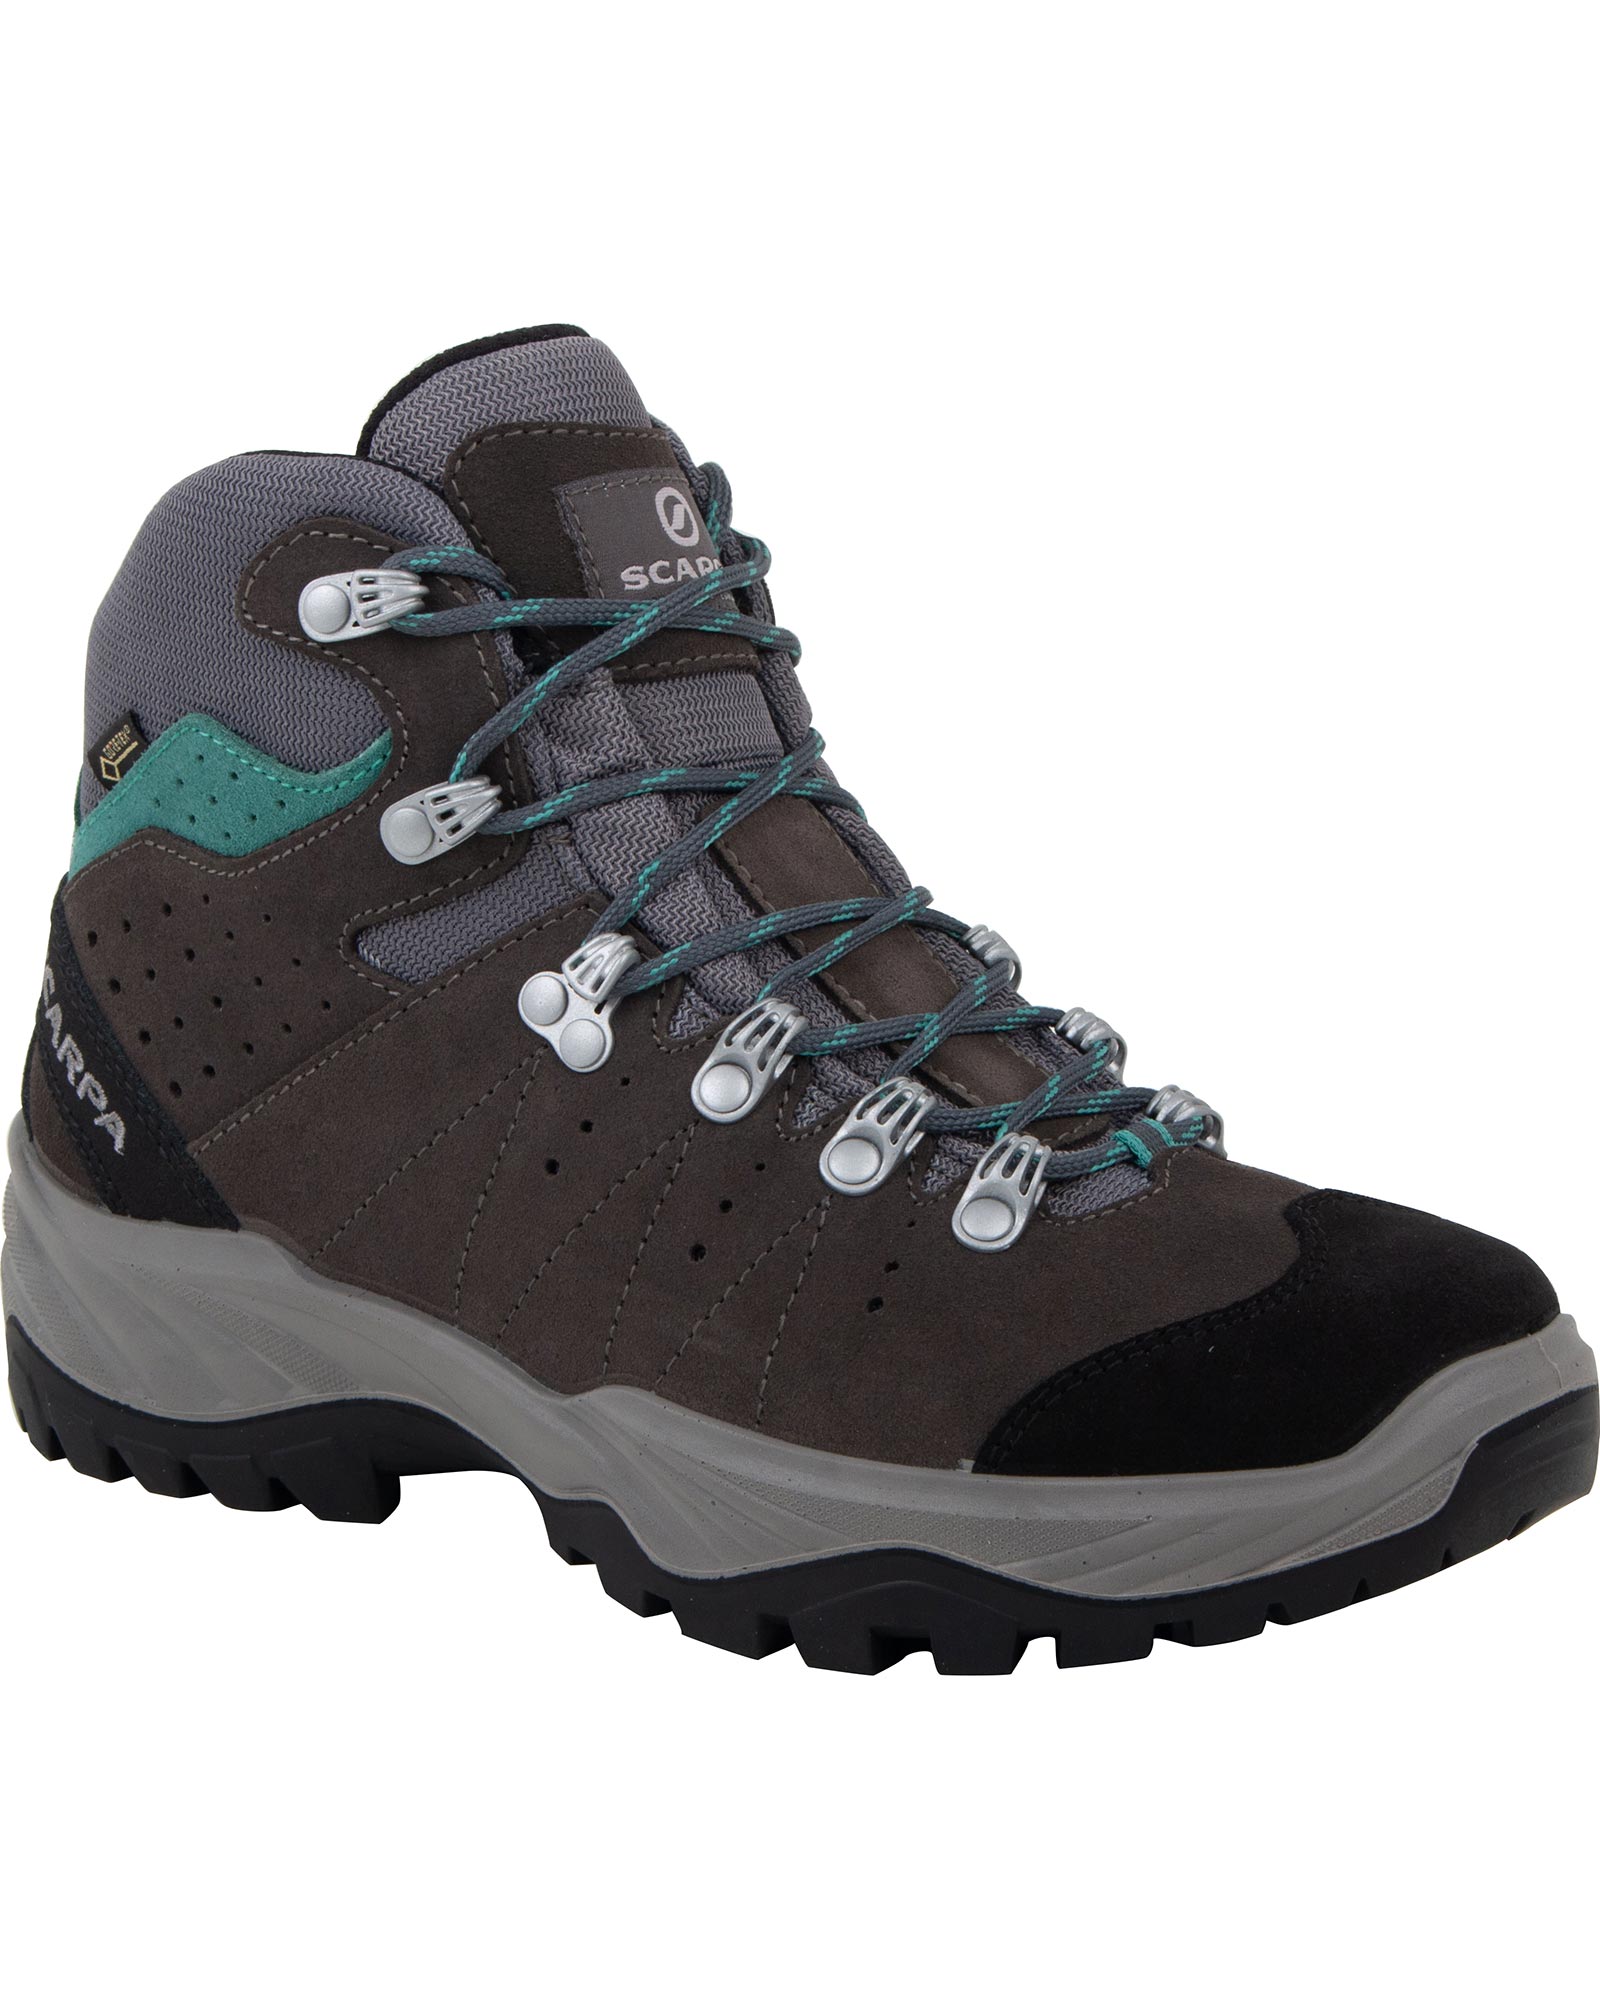 Scarpa Women's Mistral GORE-TEX Walking Boots - Ellis Brigham Mountain ...